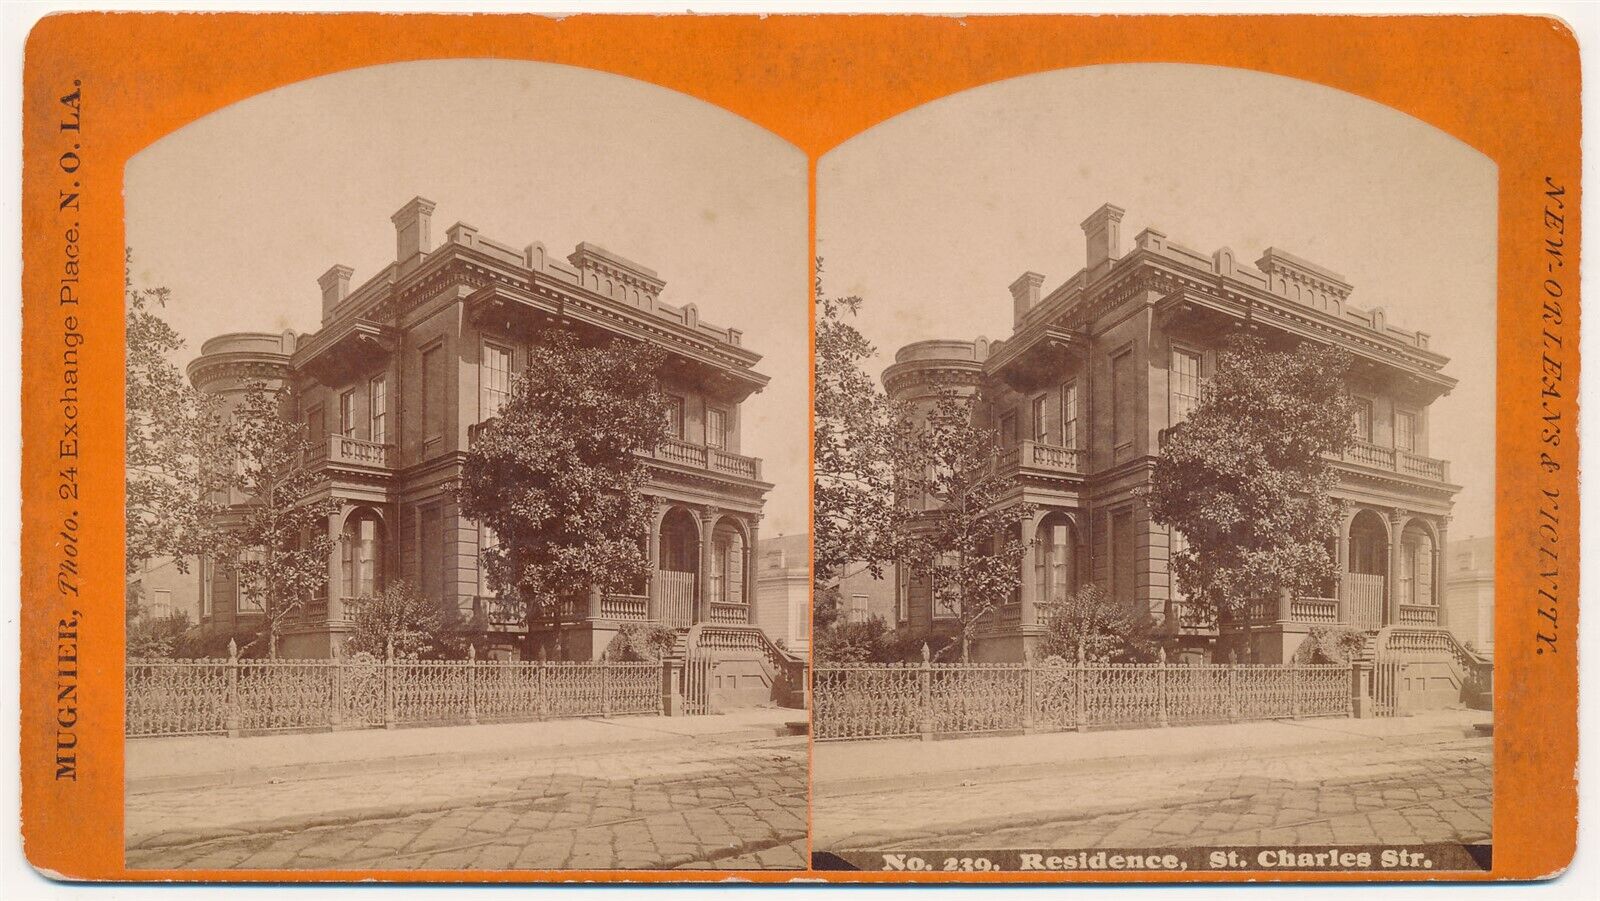 LOUISIANA SV - New Orleans - St Charles St Home - GF Mugnier 1880s